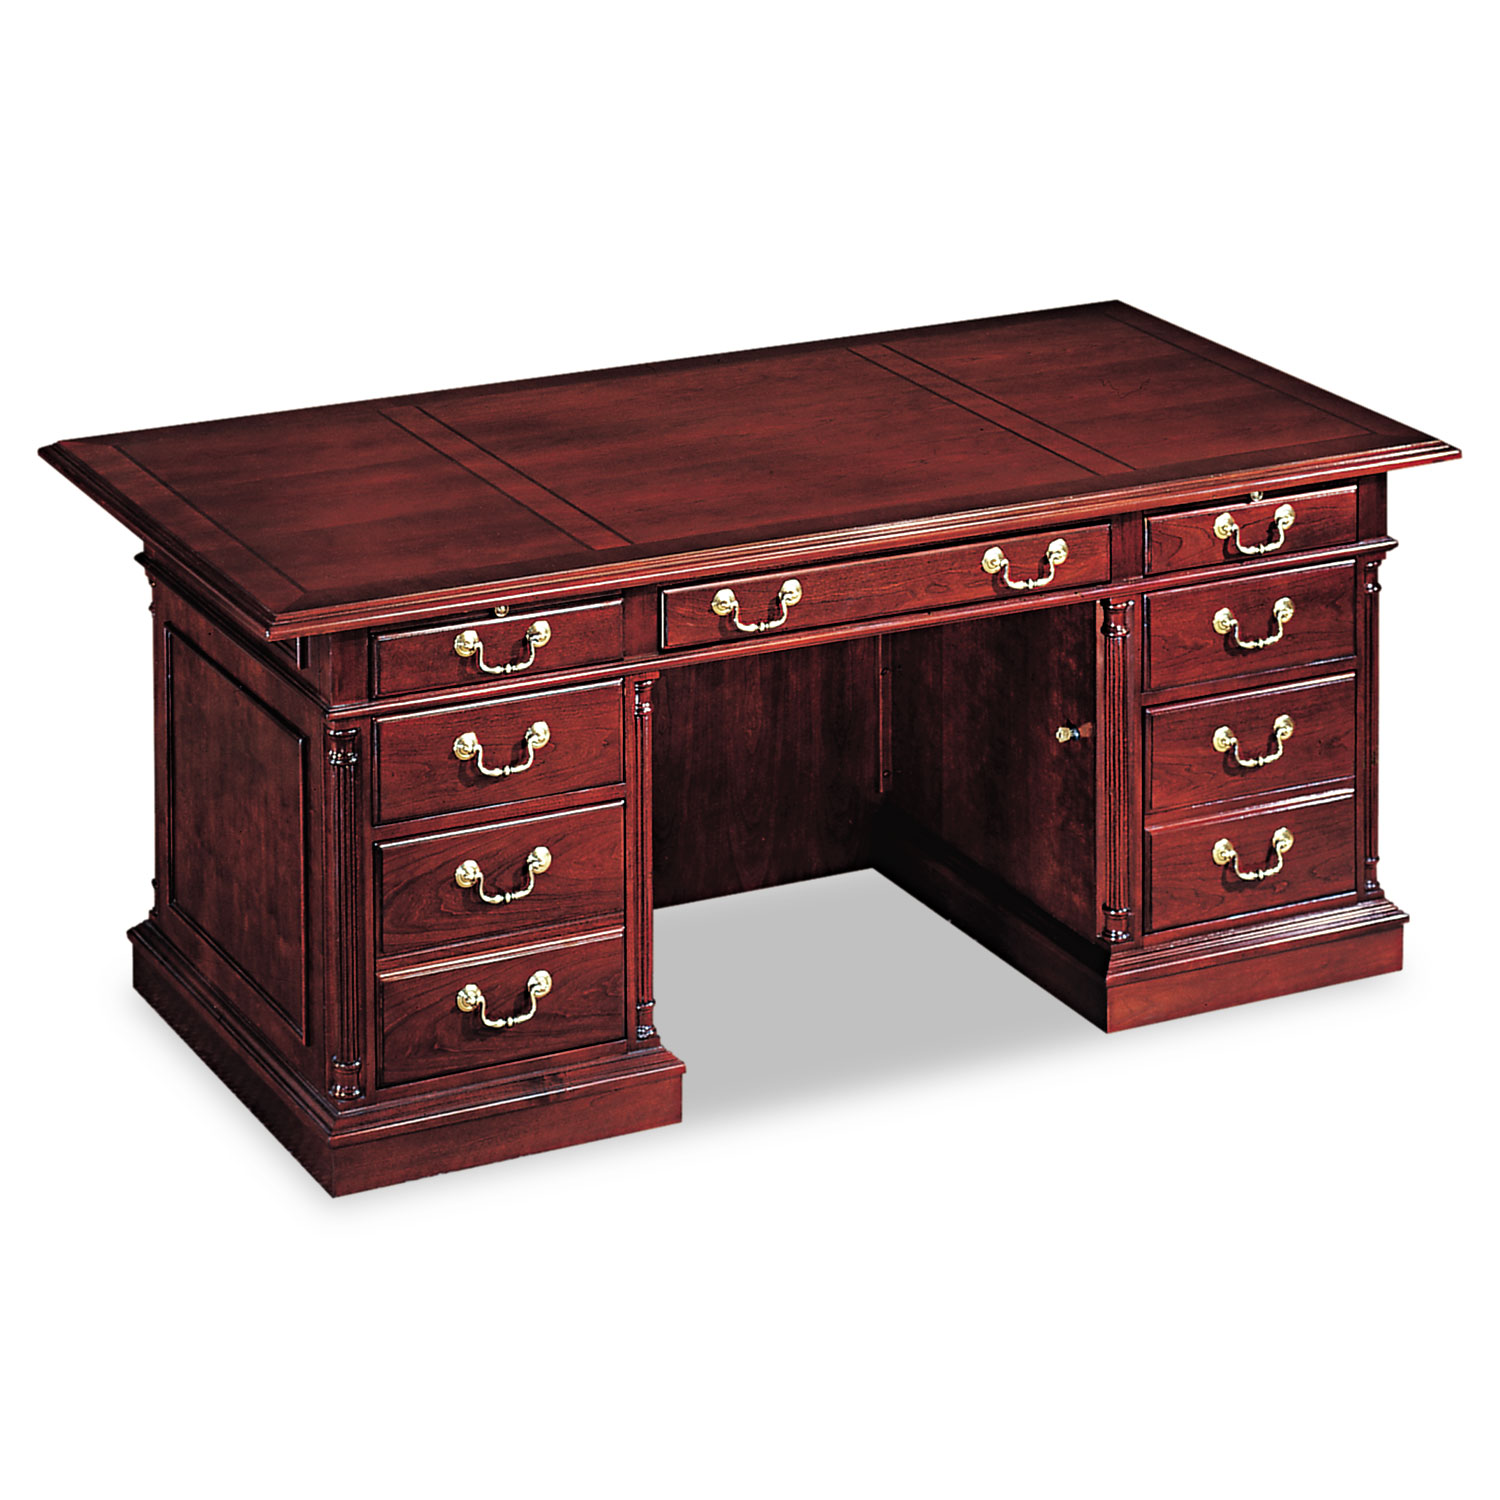  DMi Furniture 40079900036 Keswick Collection Executive Double Pedestal Desk, 72w x 36d x 30h, Cherry (DMI799036) 